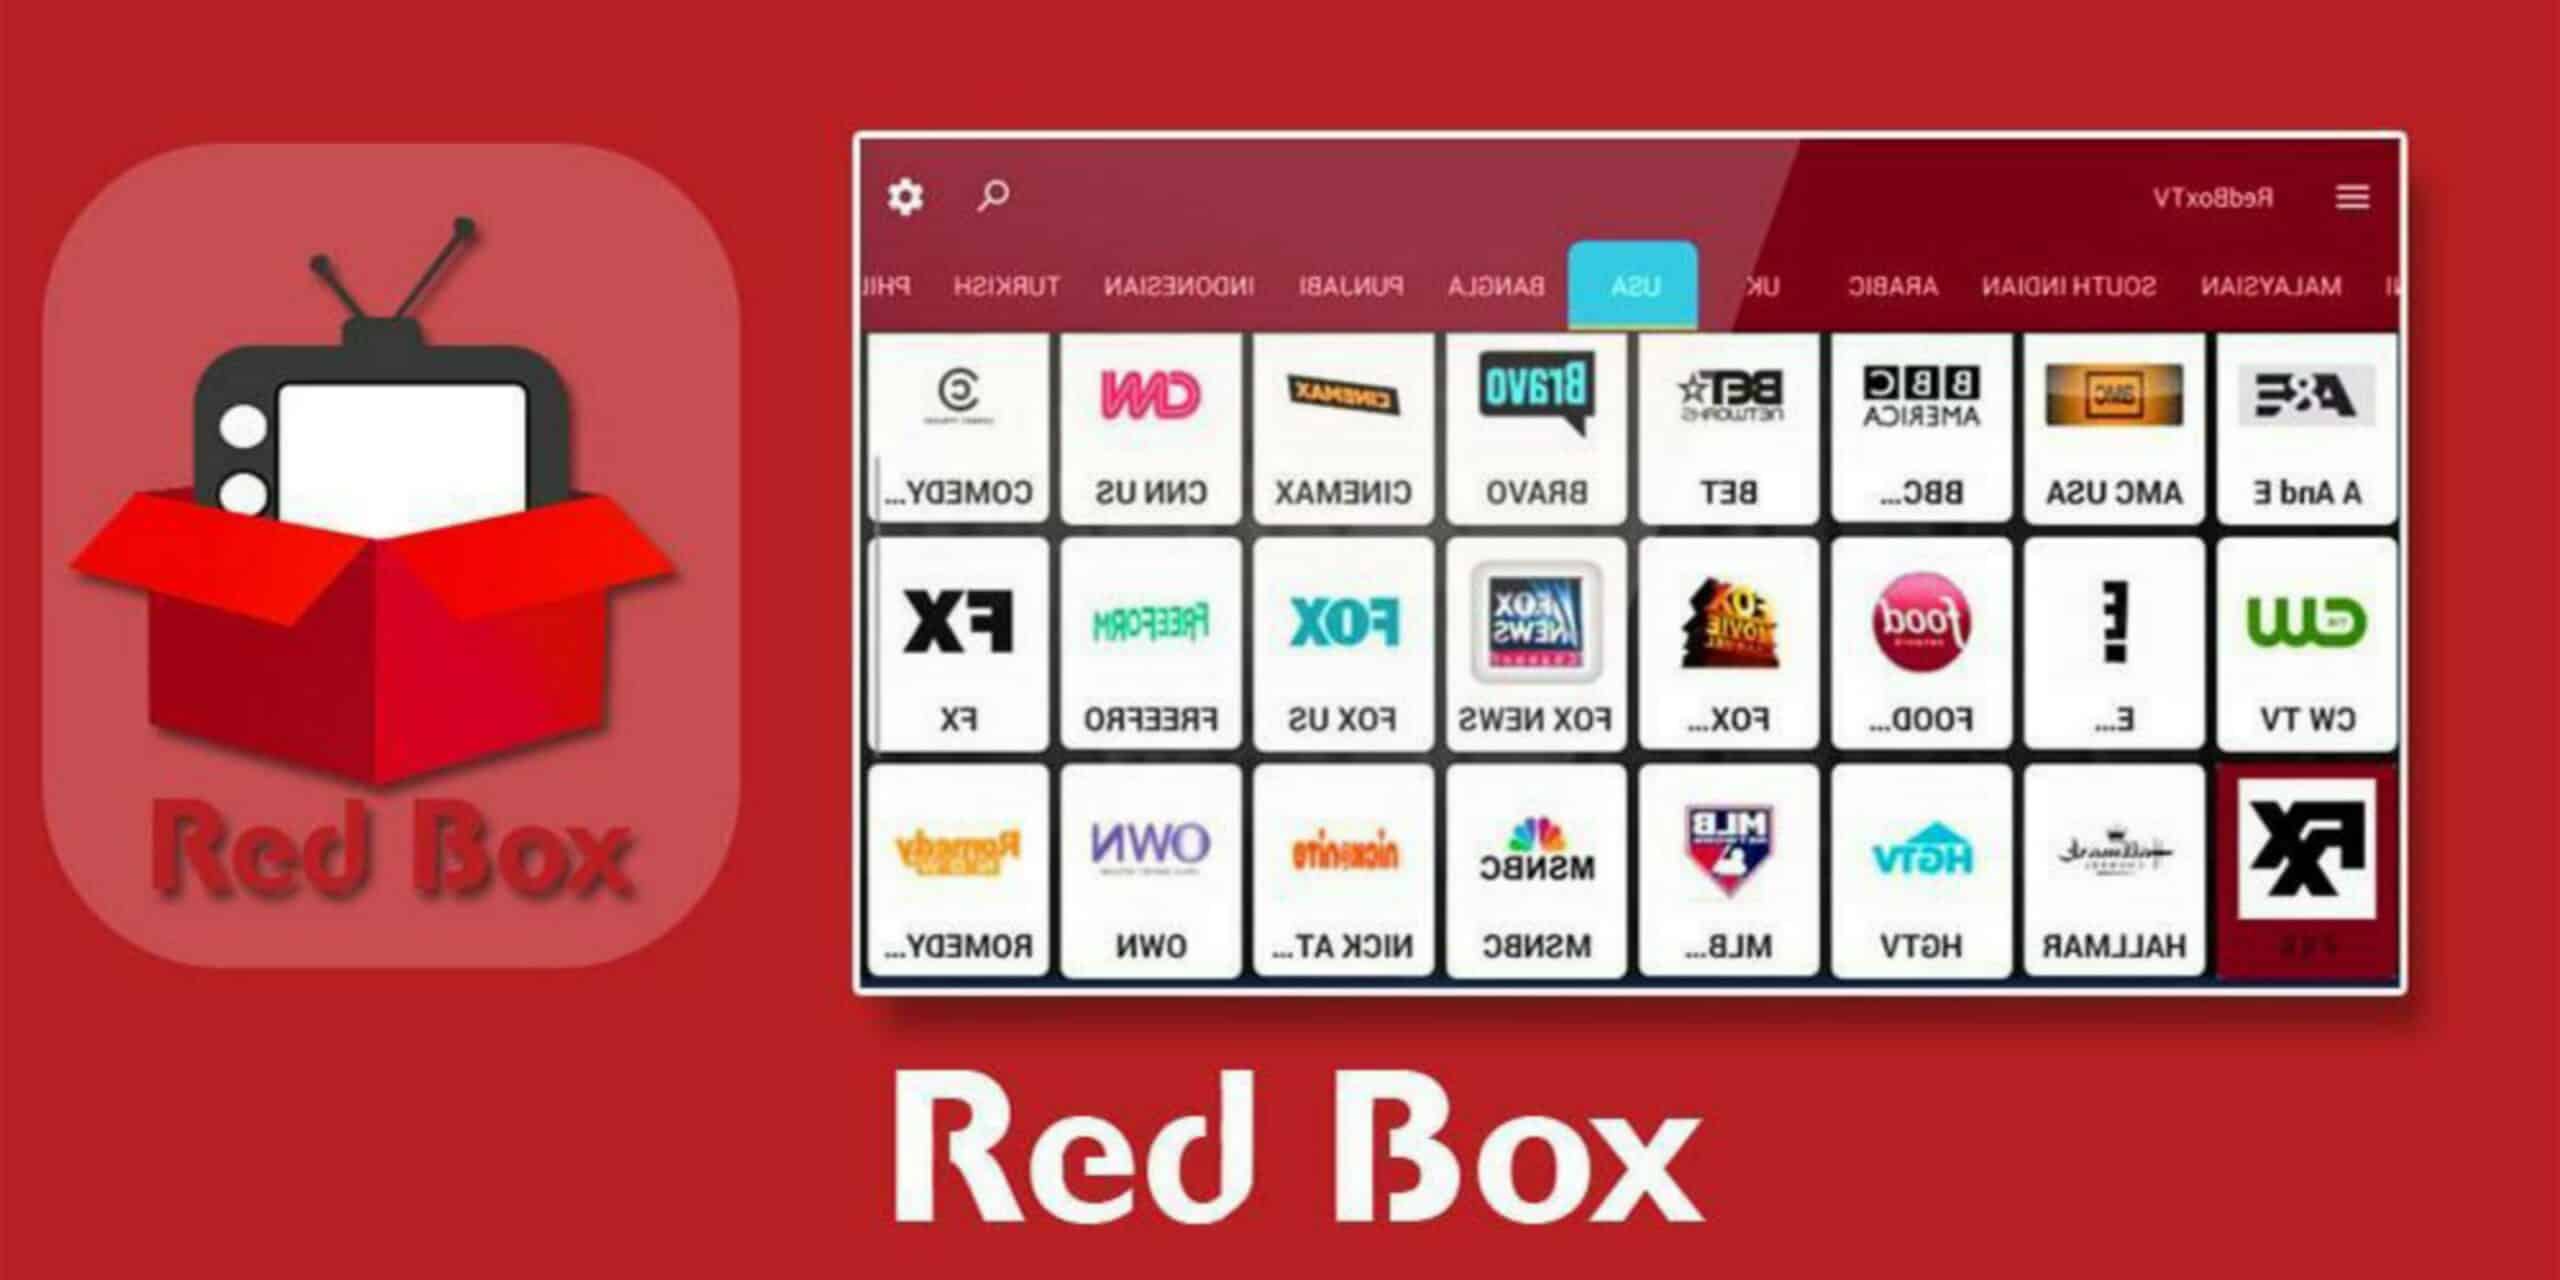 Redbox-TV